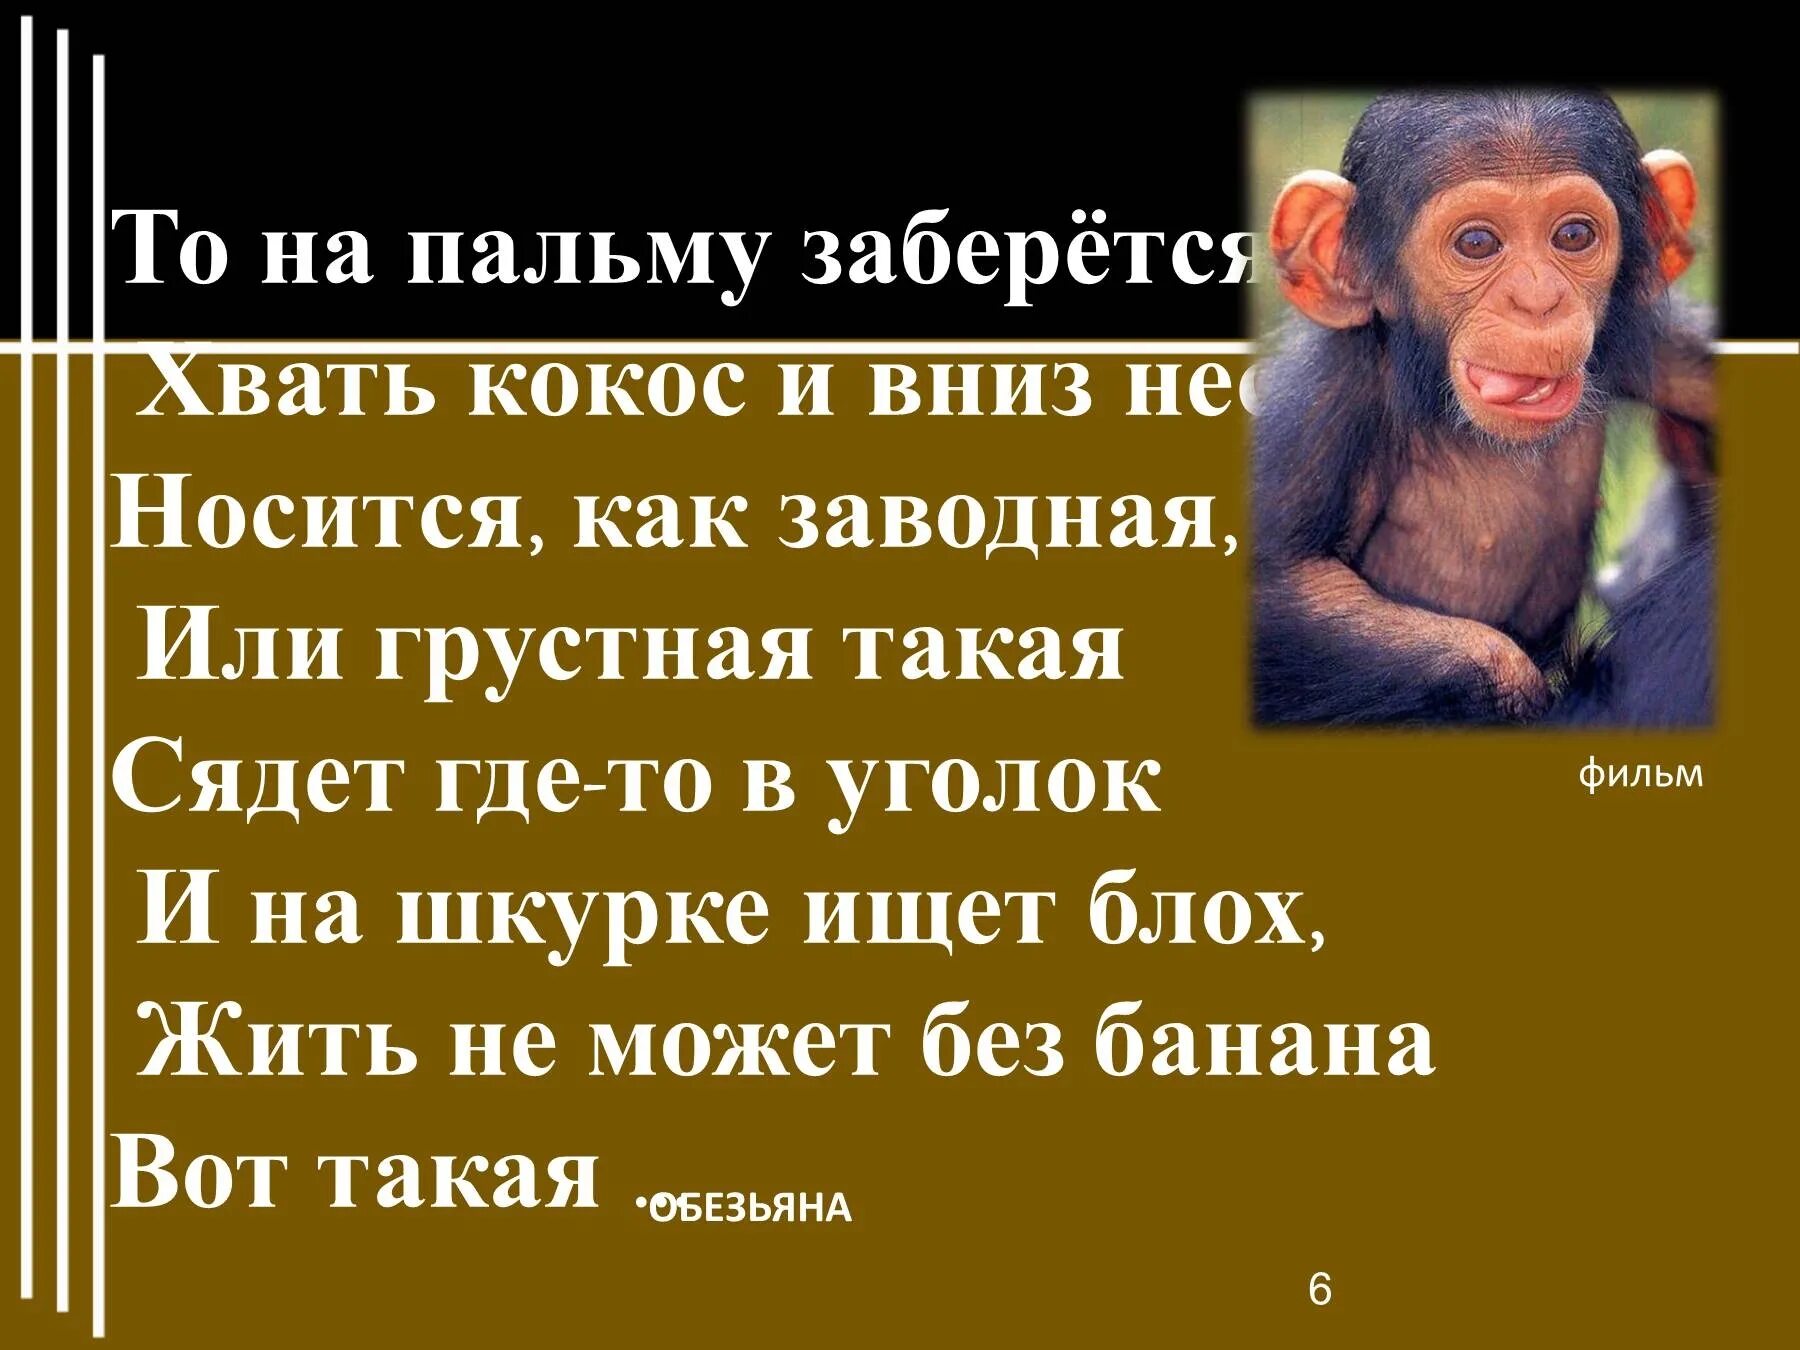 Обезьяна из рассказа про обезьянку. Про обезьянку 3 класс. Житков про обезьянку. Предложение про обезьяну. Рисунок к рассказу про обезьянку.